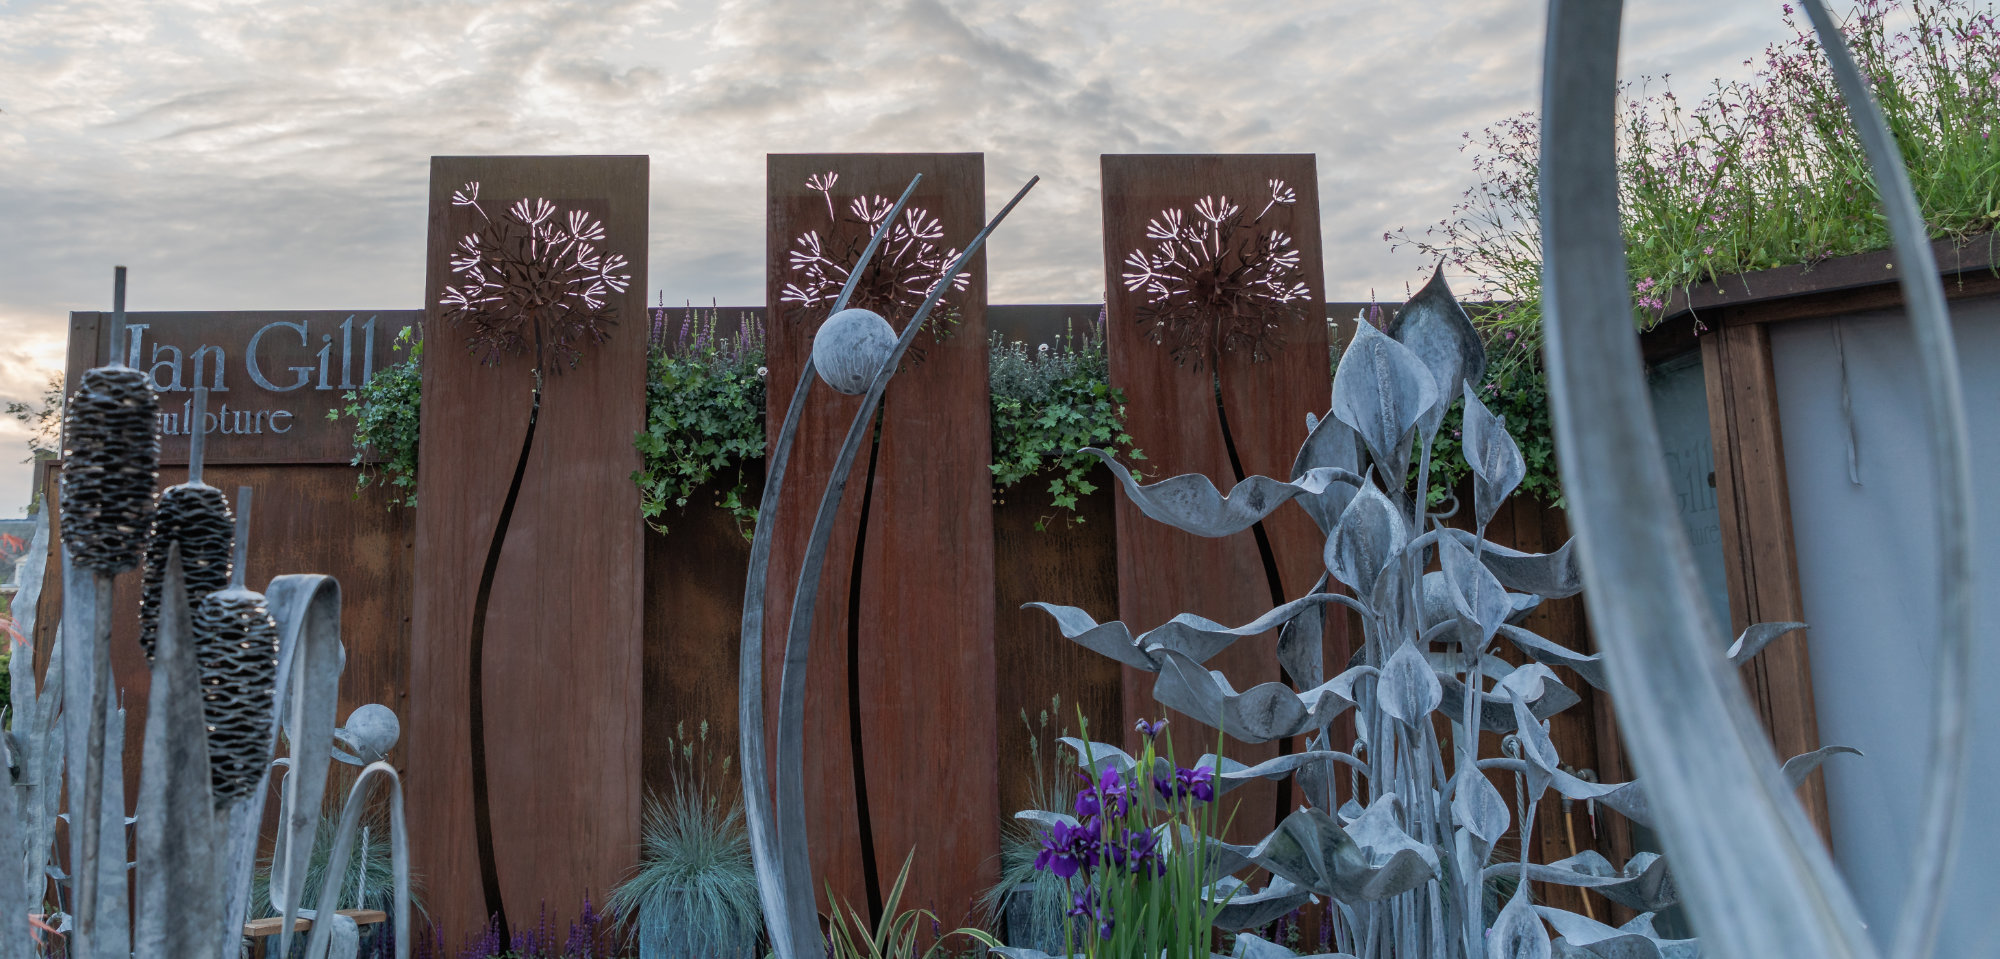 Ian Gill Sculpture at Chelsea Flower Show